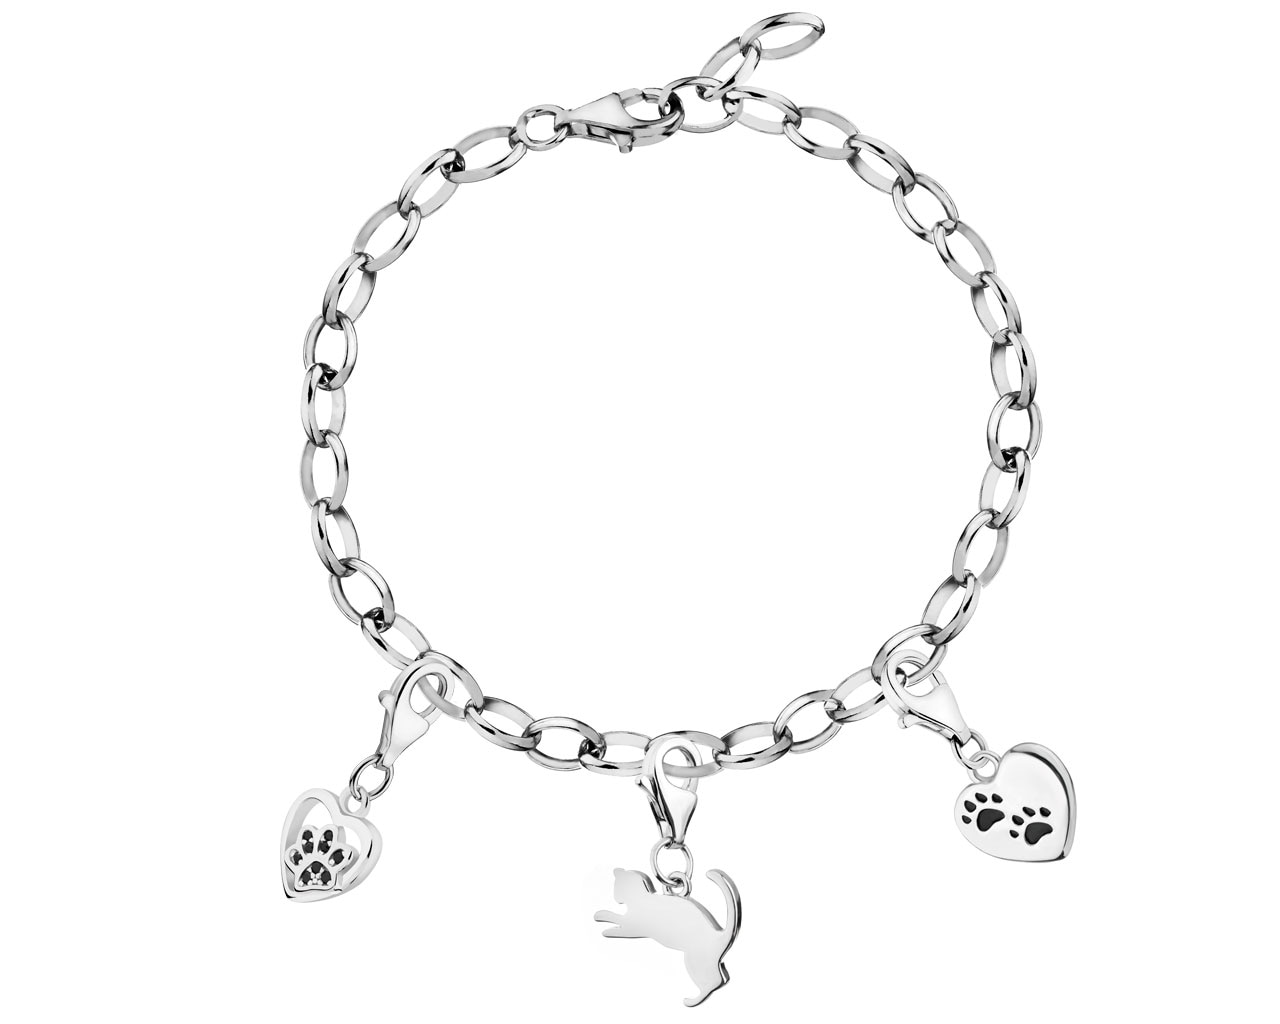 Silver bracelet Charms -  set - cat, heart, paws